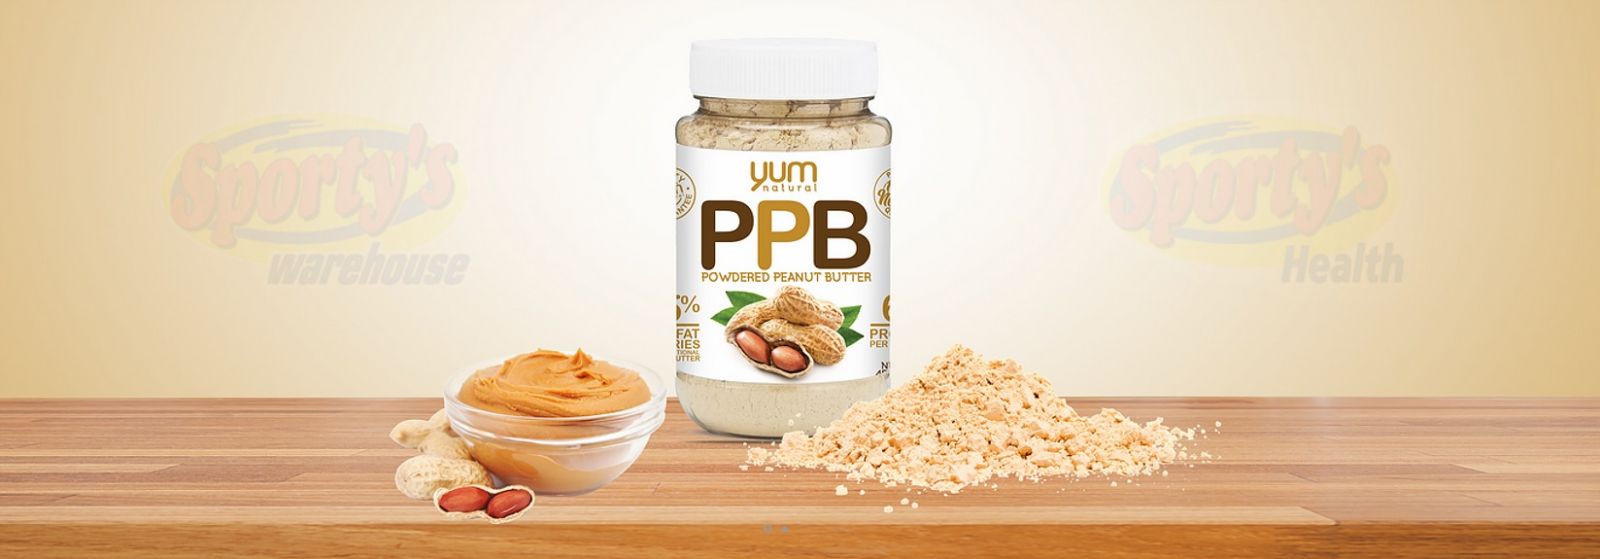 Peanut Butter Powder image